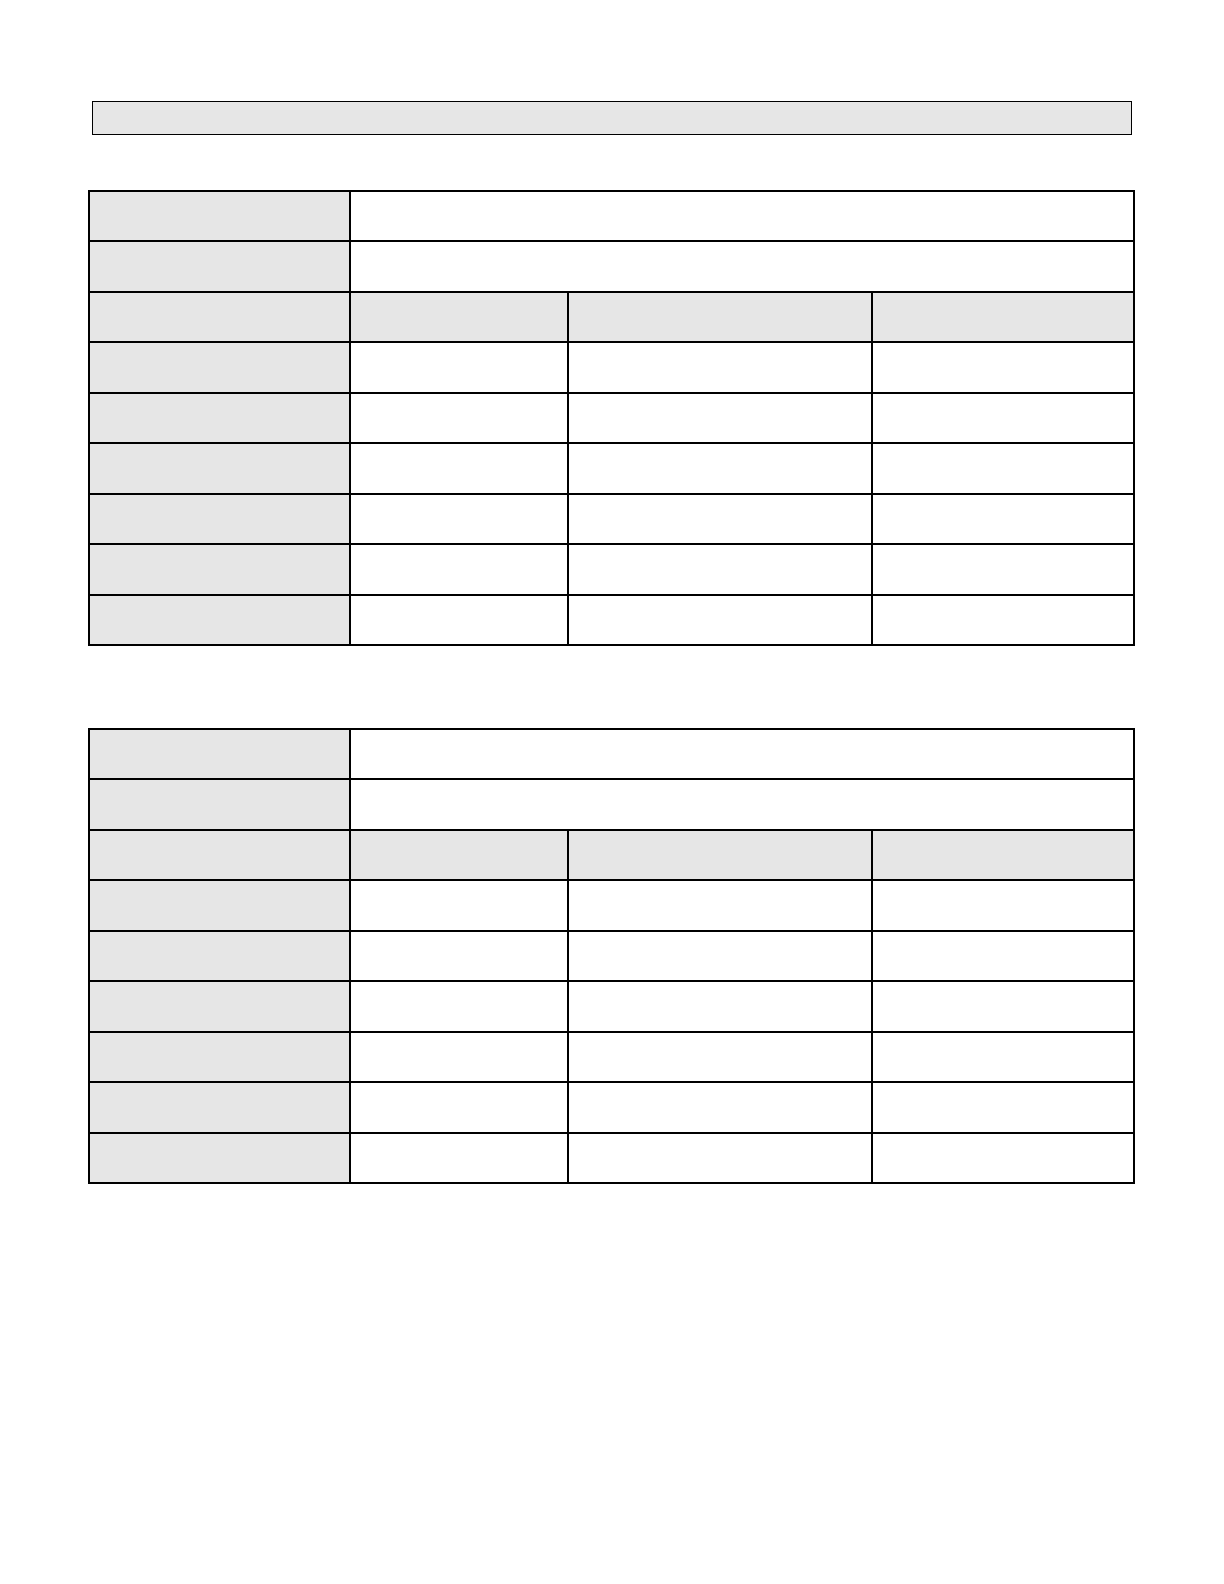 whist-score-sheet-template-edit-fill-sign-online-handypdf